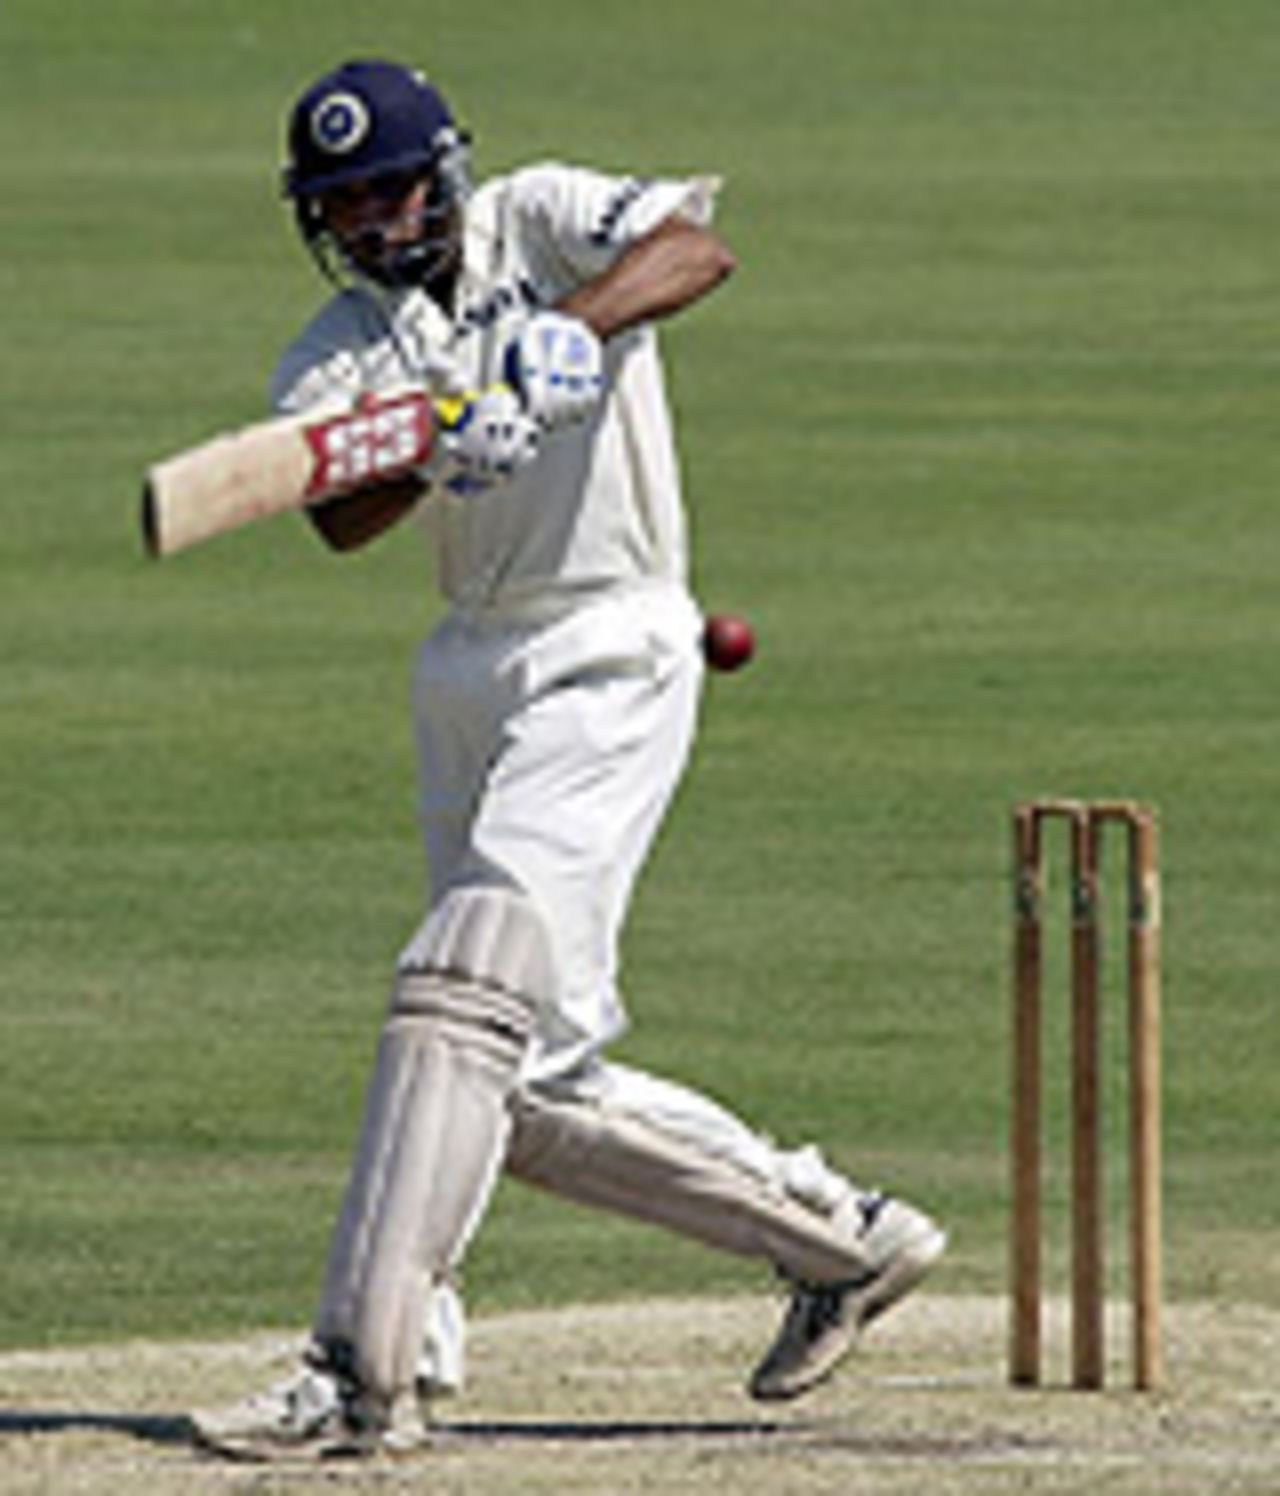 VVS Laxman plays the ball to leg, Queensland Academy of Sport v Indians, Allan Border Field, Brisbane, November 30, 2003